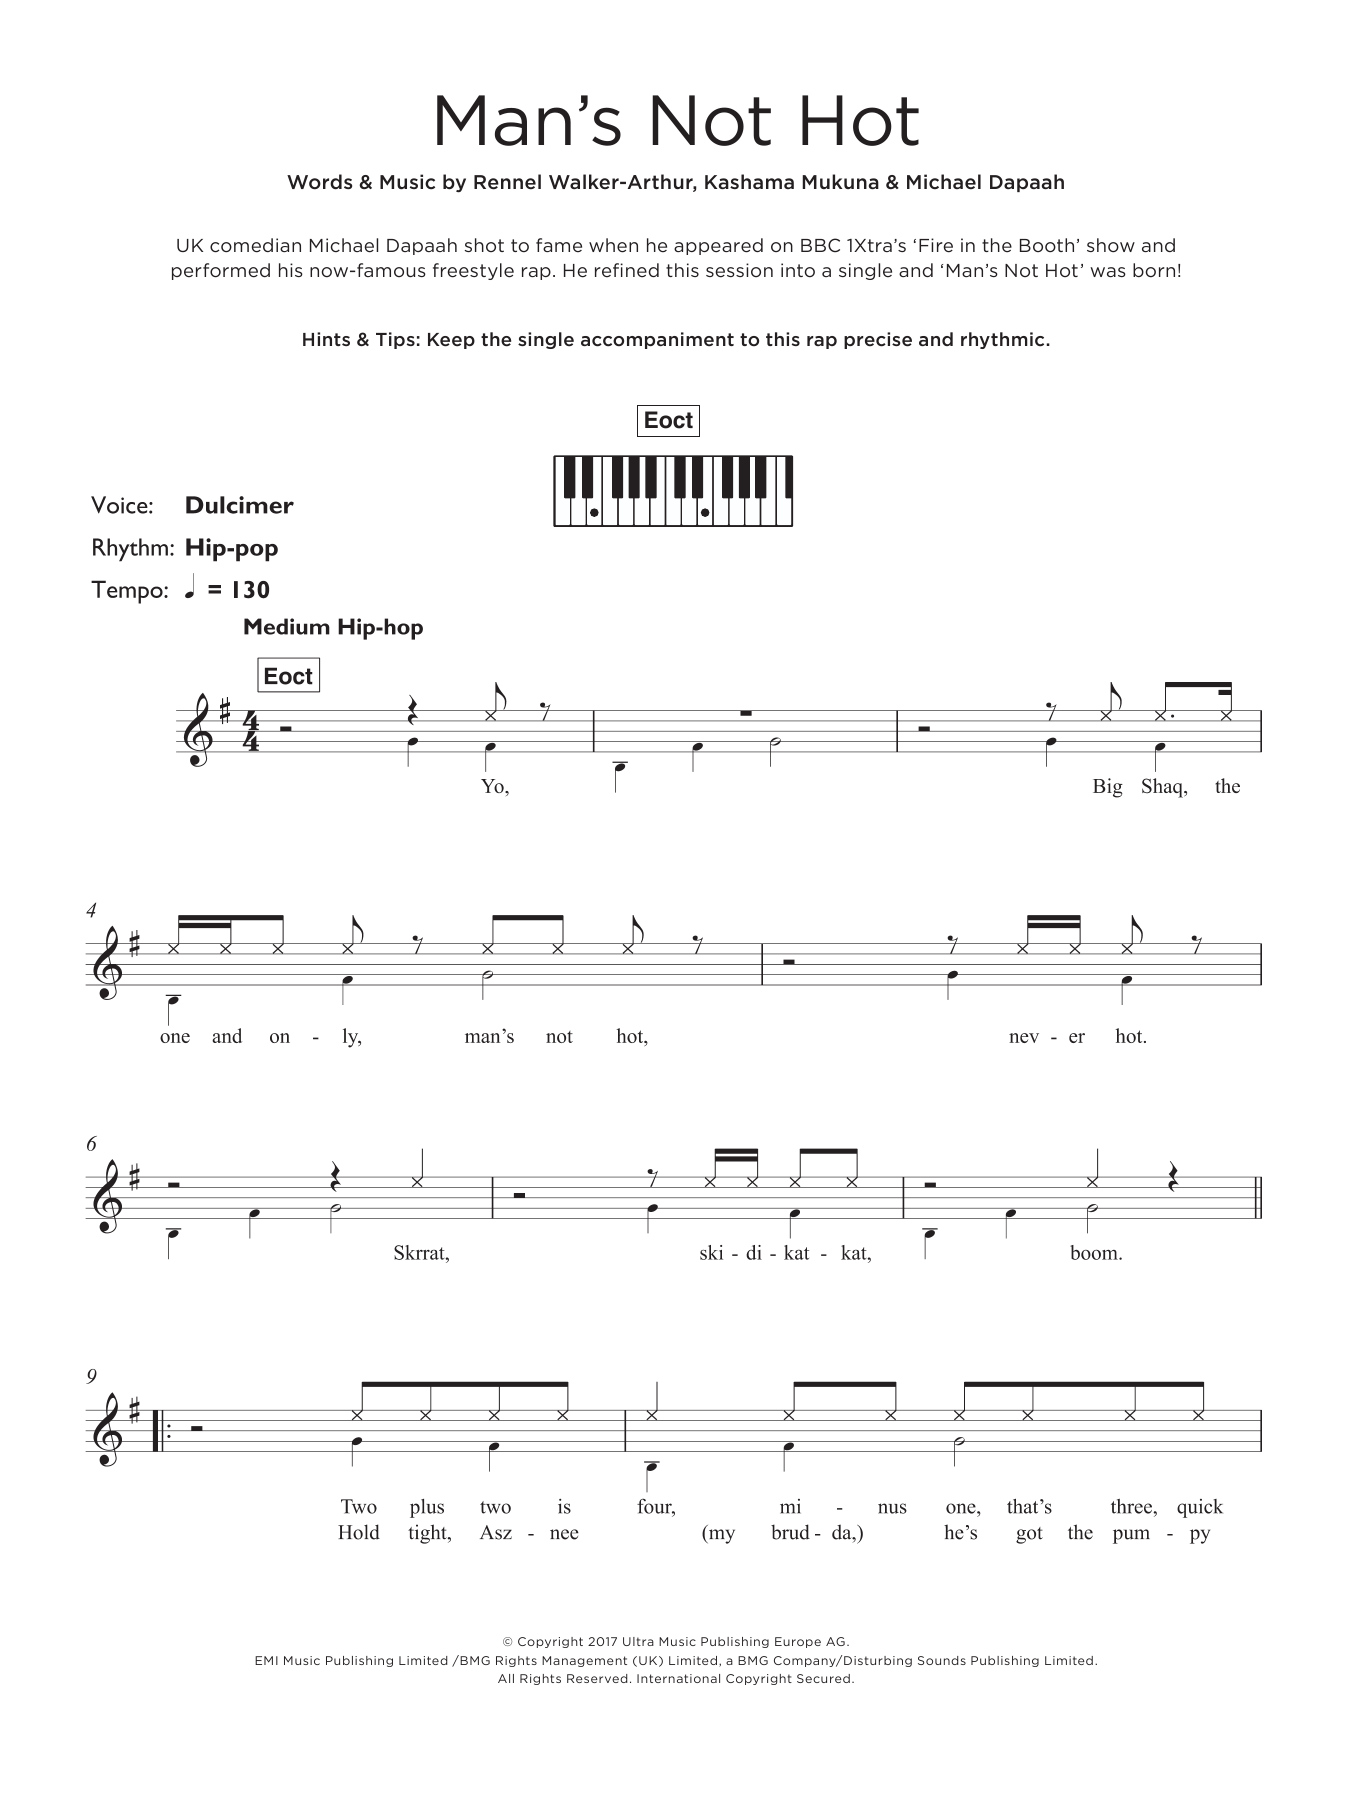 Big Shaq Man's Not Hot Sheet Music Notes & Chords for Keyboard - Download or Print PDF